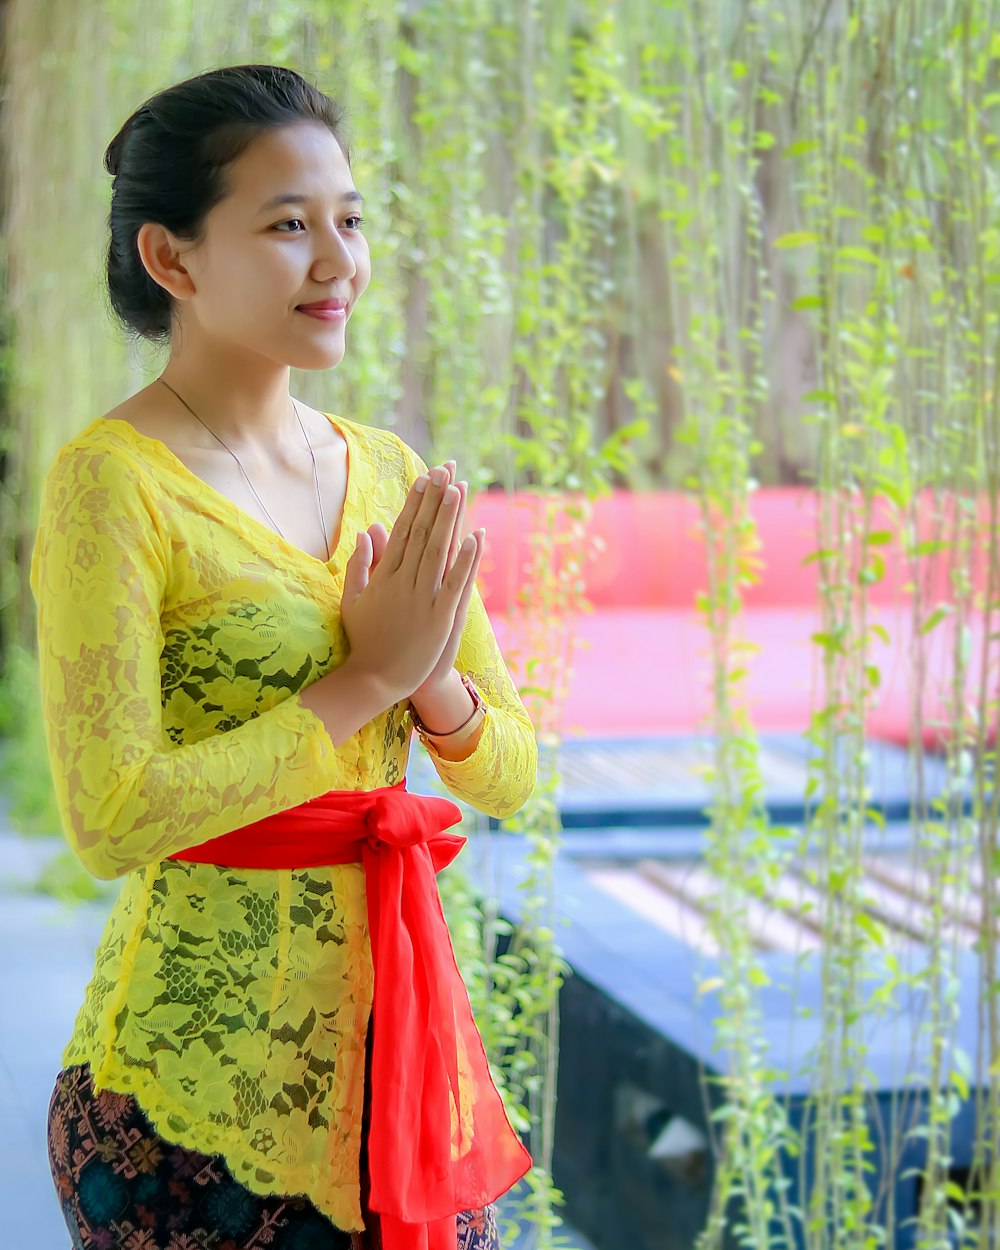 Femme en robe sari fleurie jaune et rouge